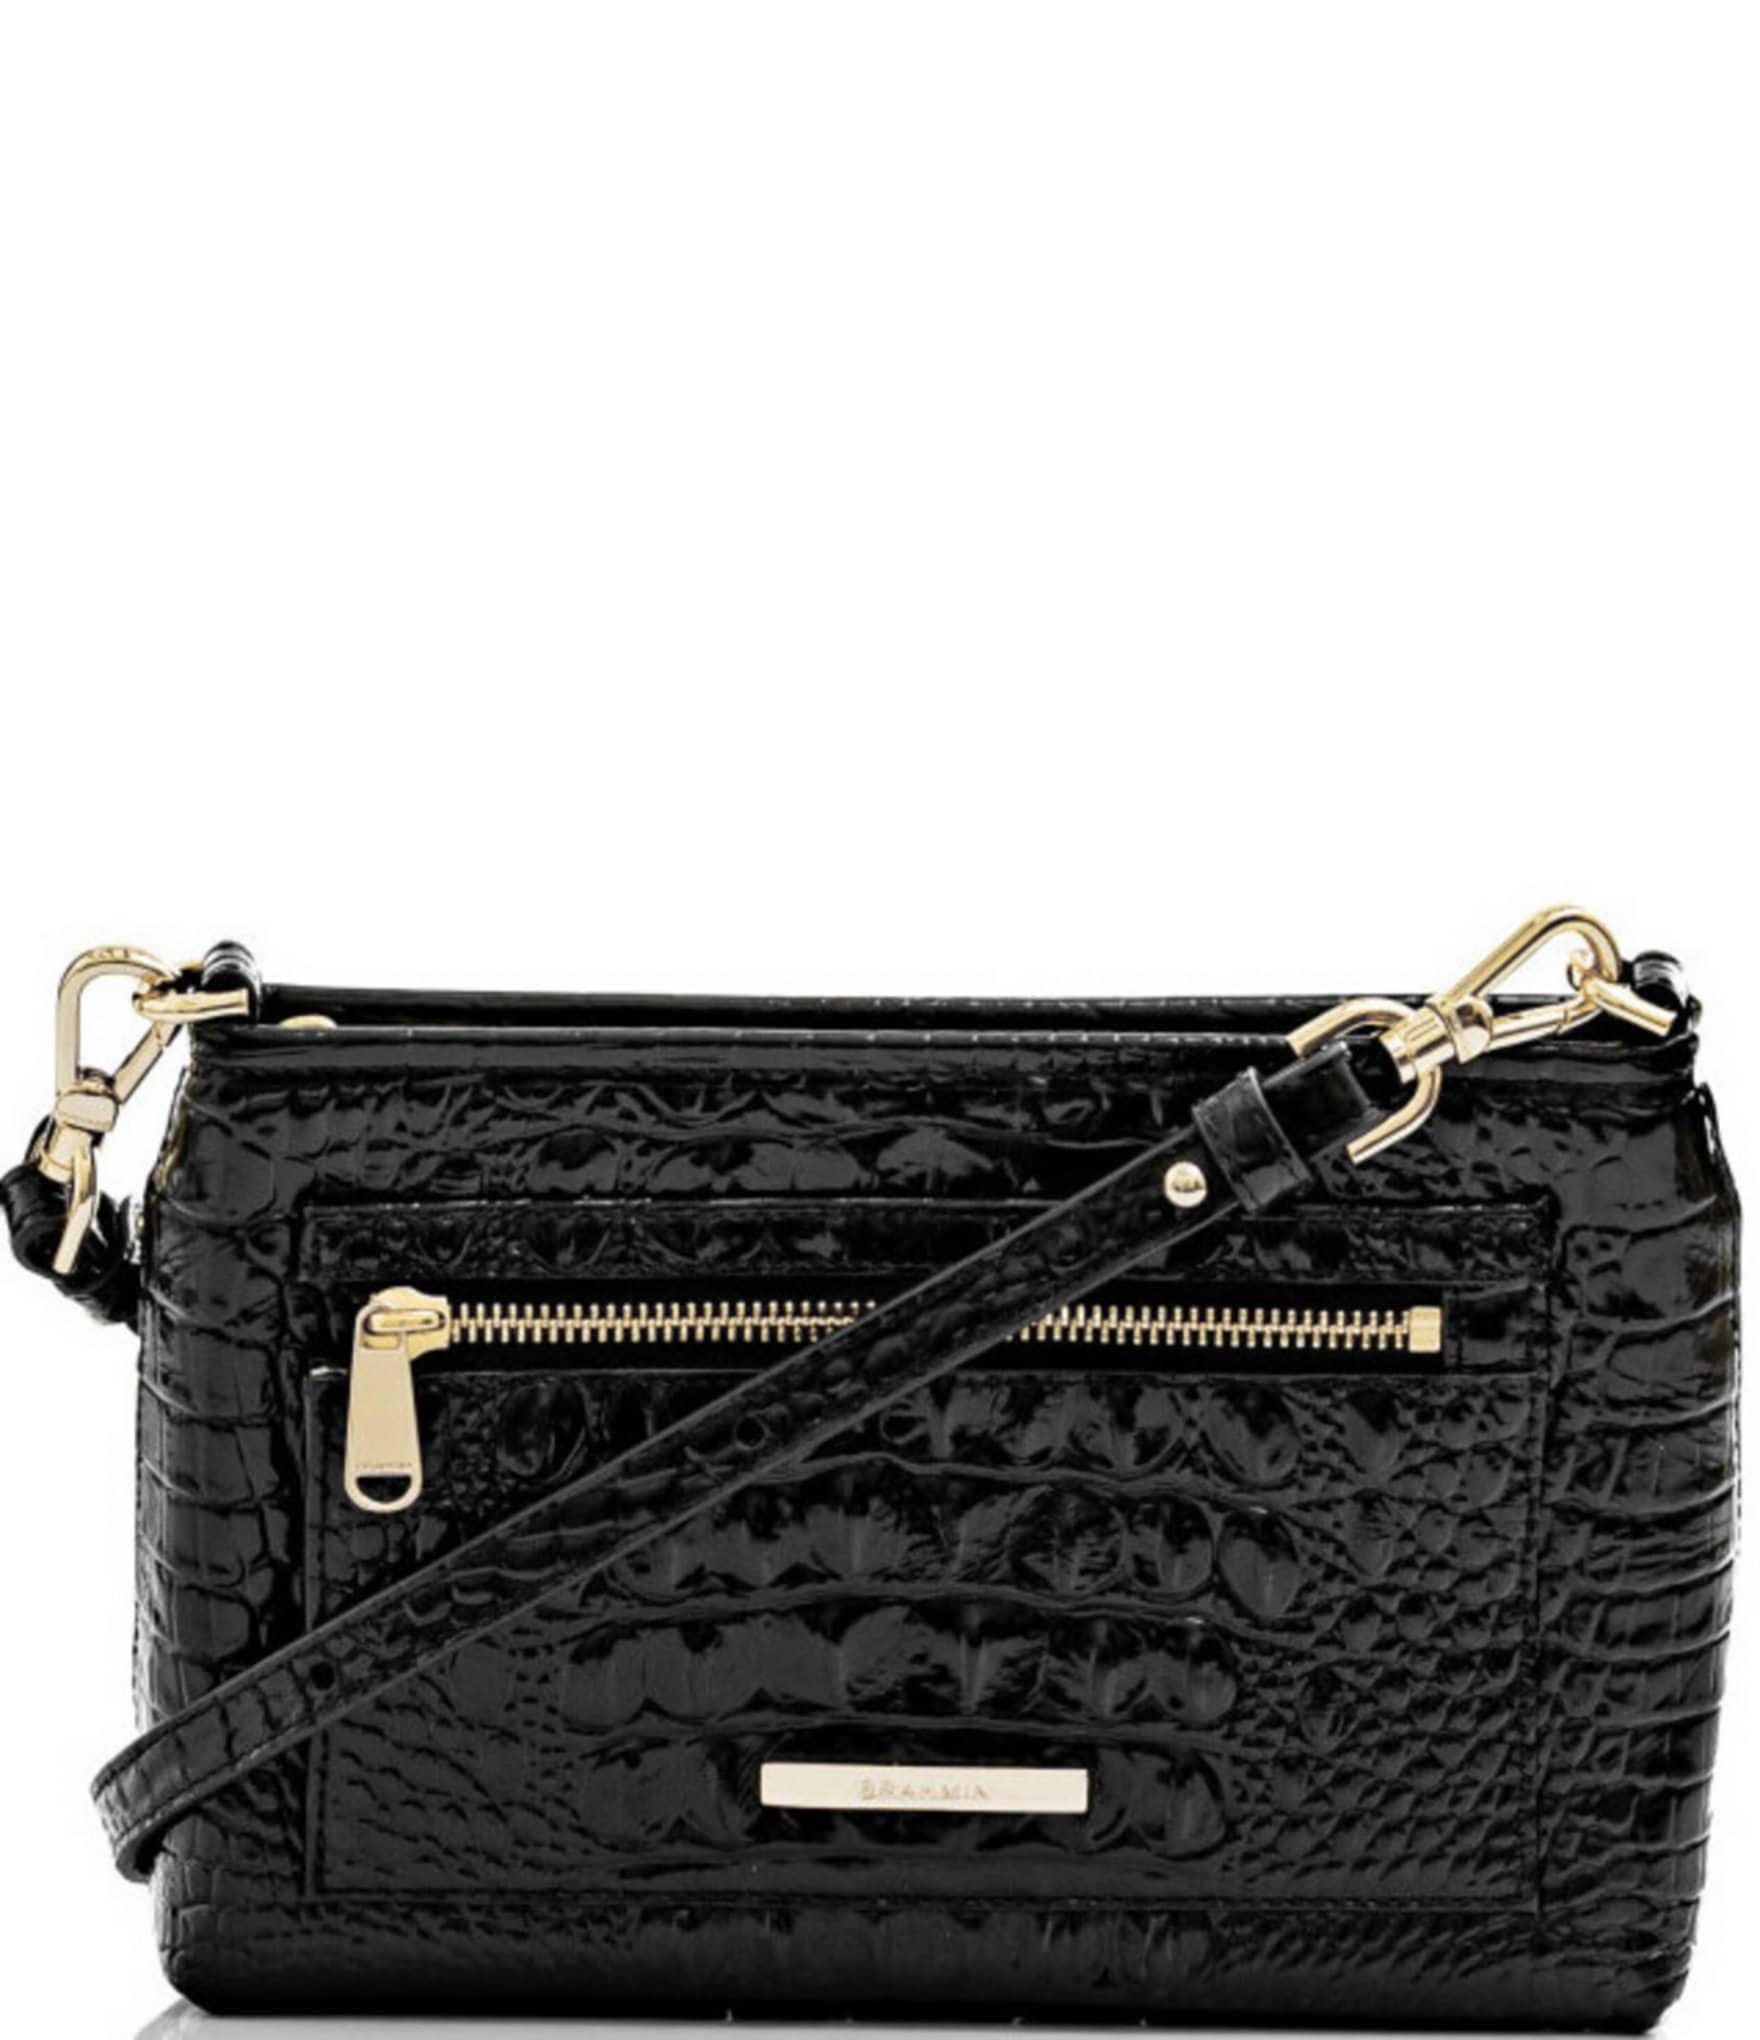 BRAHMIN SHIRA BUCKET Bag Daylily Volute Leather Tote Bag Purse Handbag $355  NWT $543.24 - PicClick AU